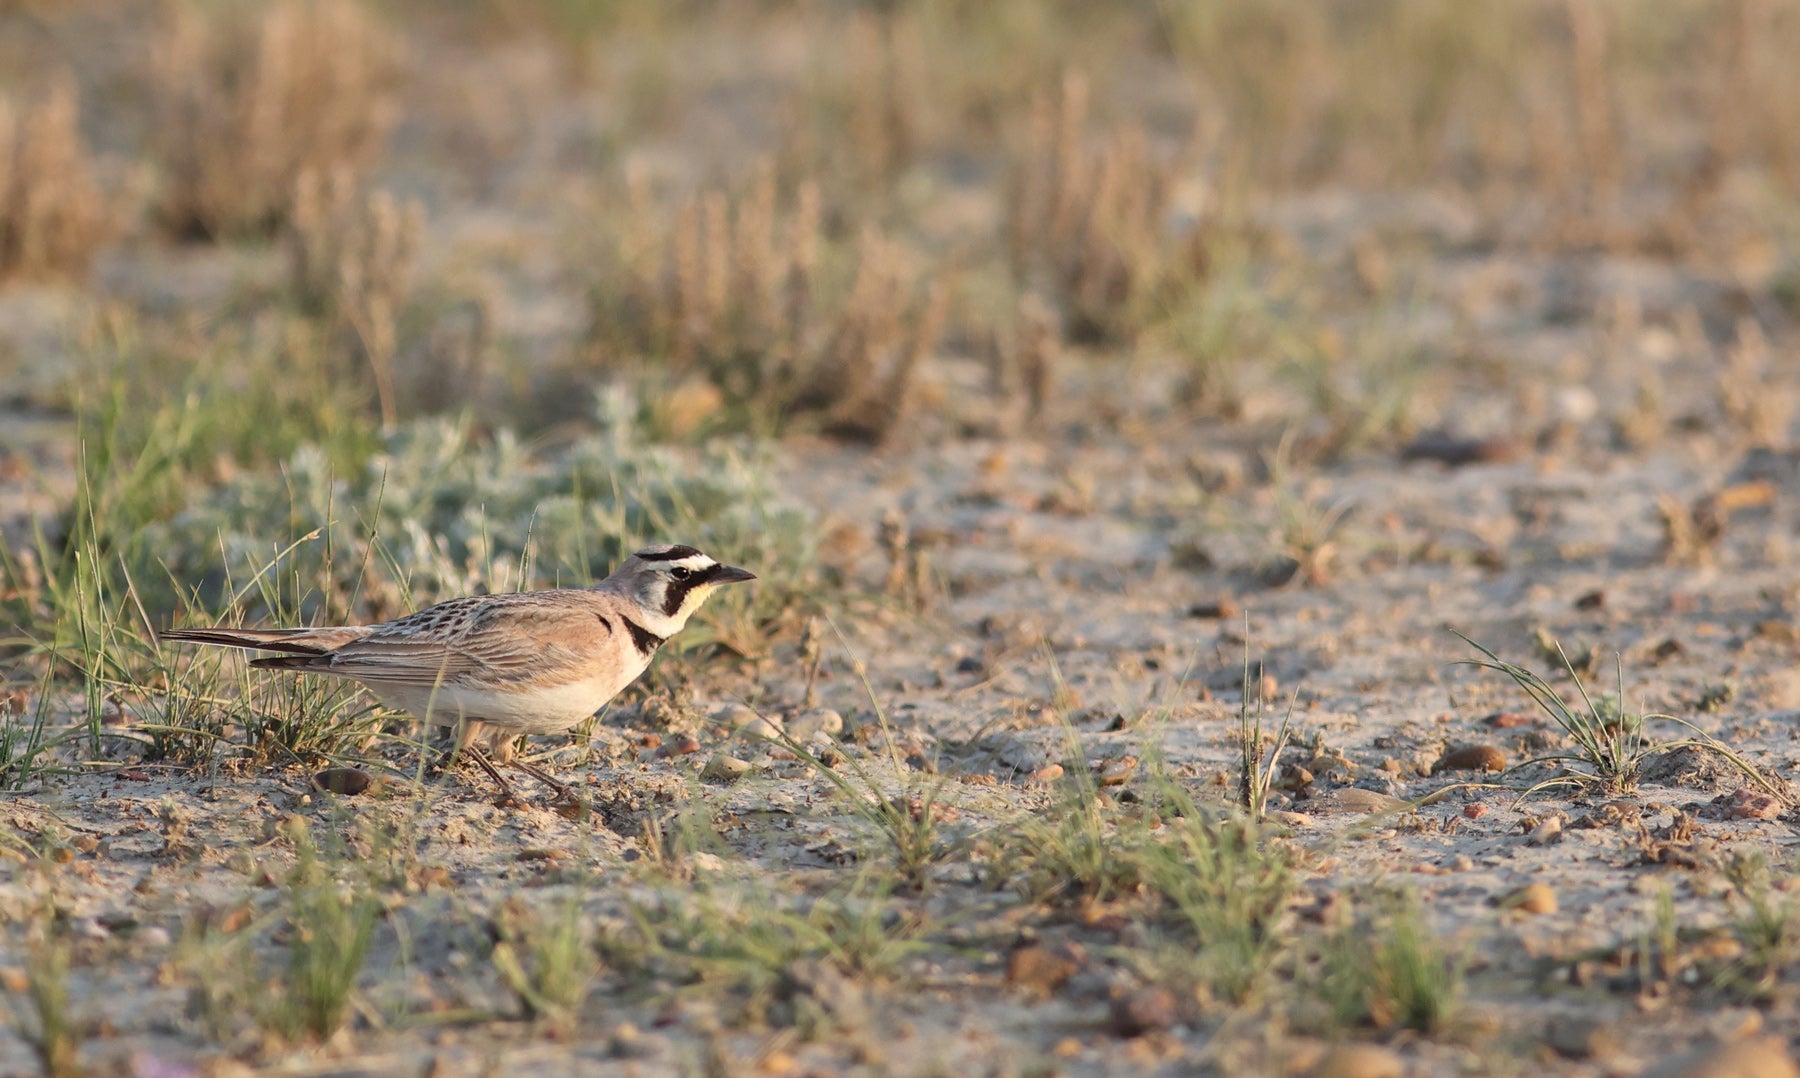 	A horned lark bird walks across an area with dirt and patches of short grass on Montana's prairie